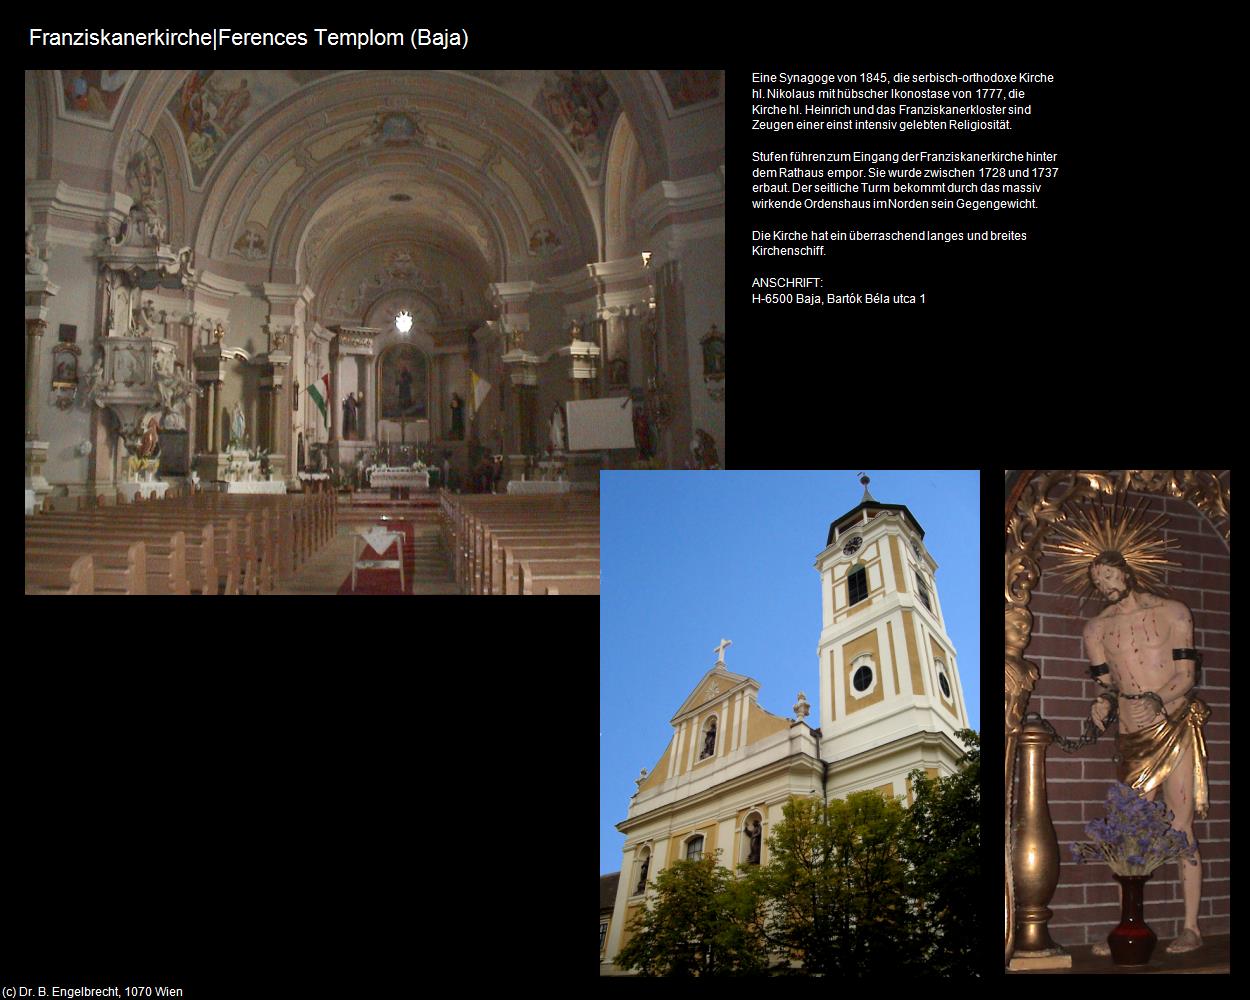 Franziskanerkirche|ferences templom (Baja) in UNGARN 